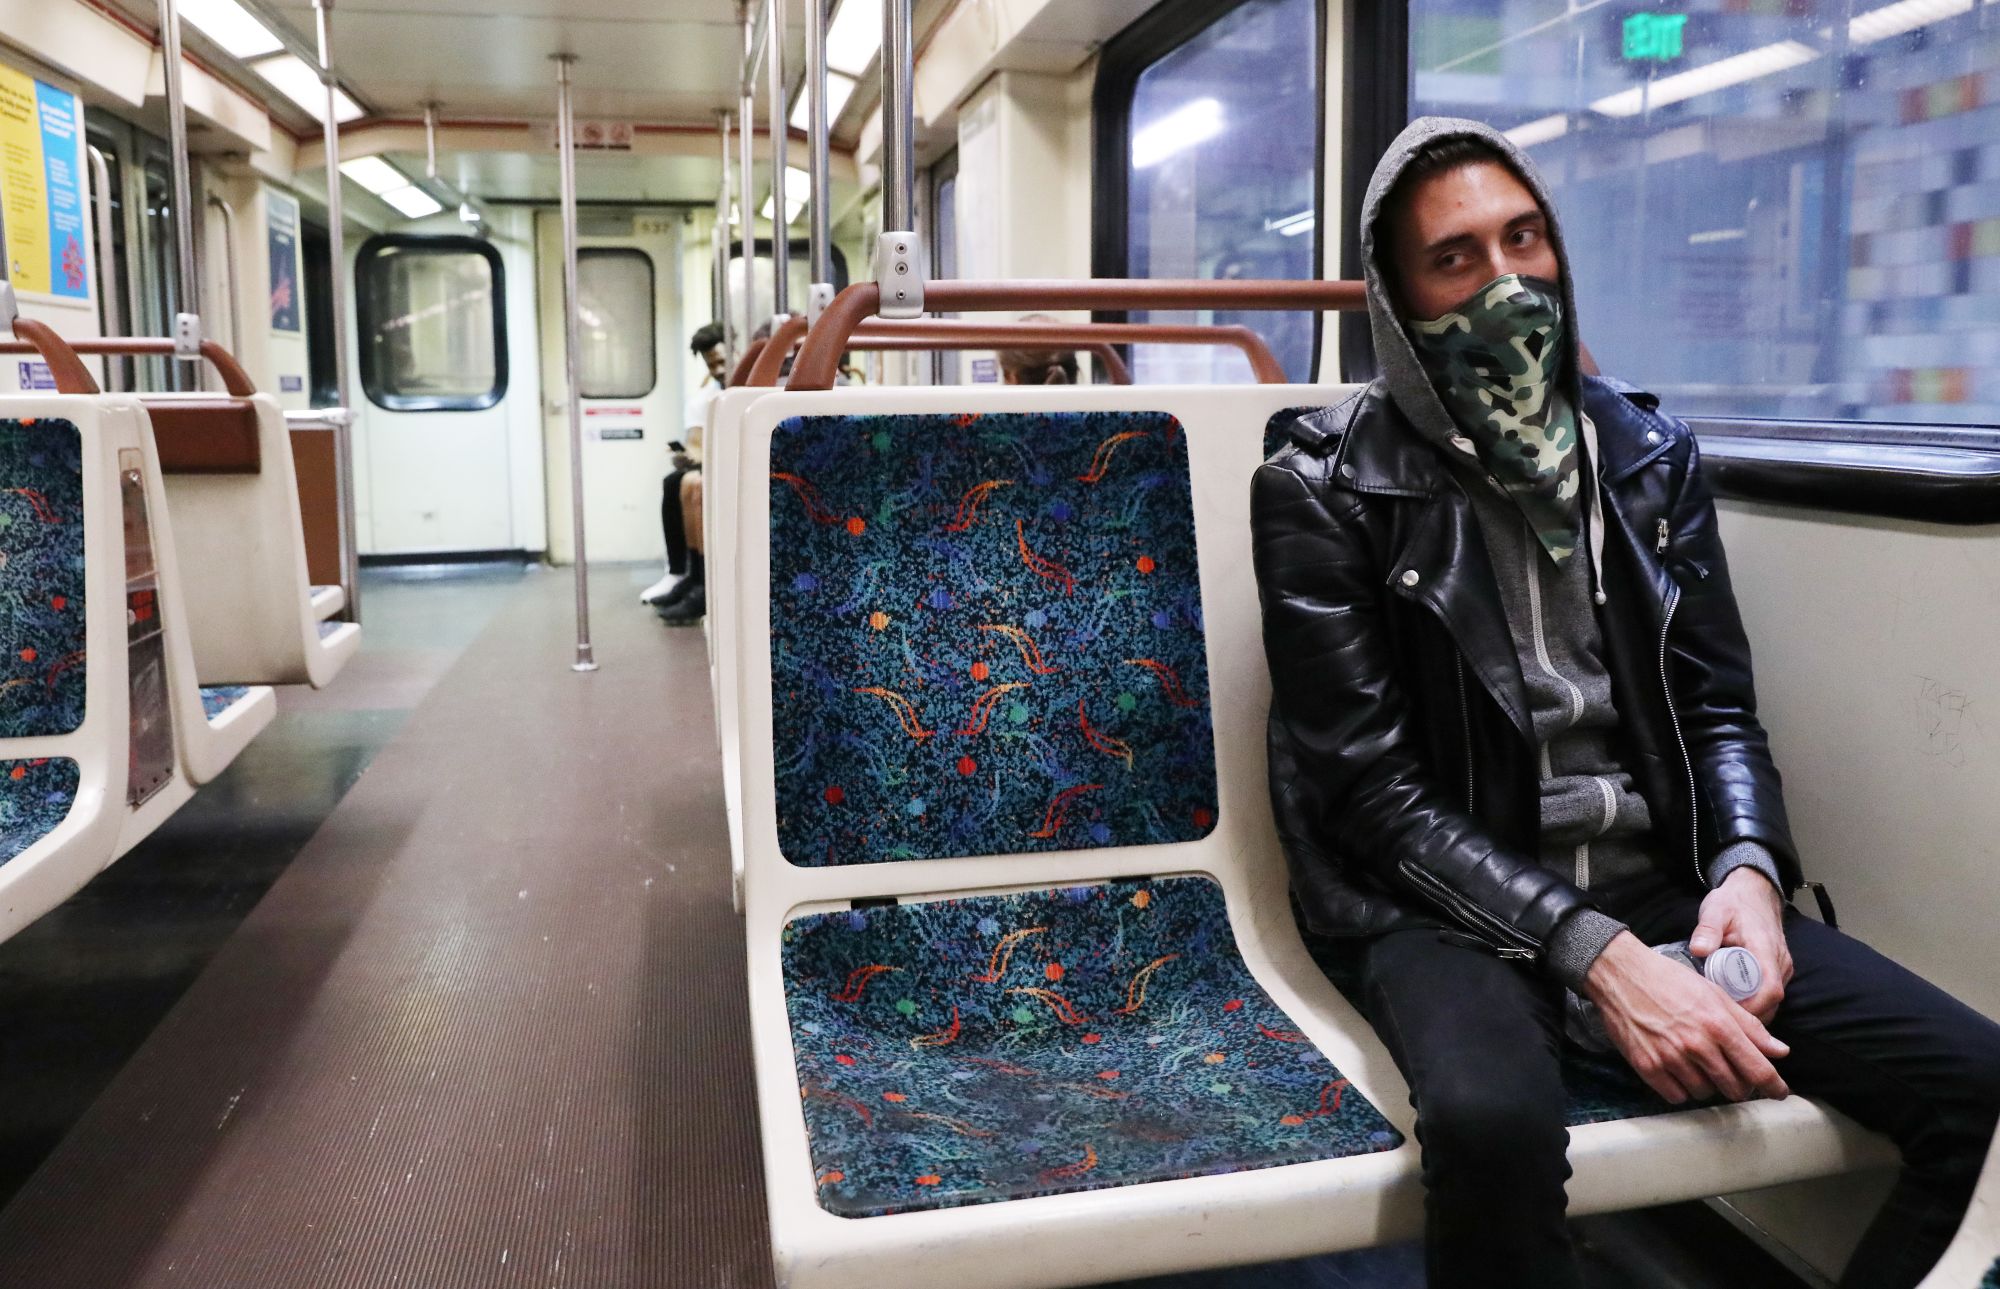 CNNE 805826 - los angeles metro system sees 70 percent drop in ridership due to coronavirus